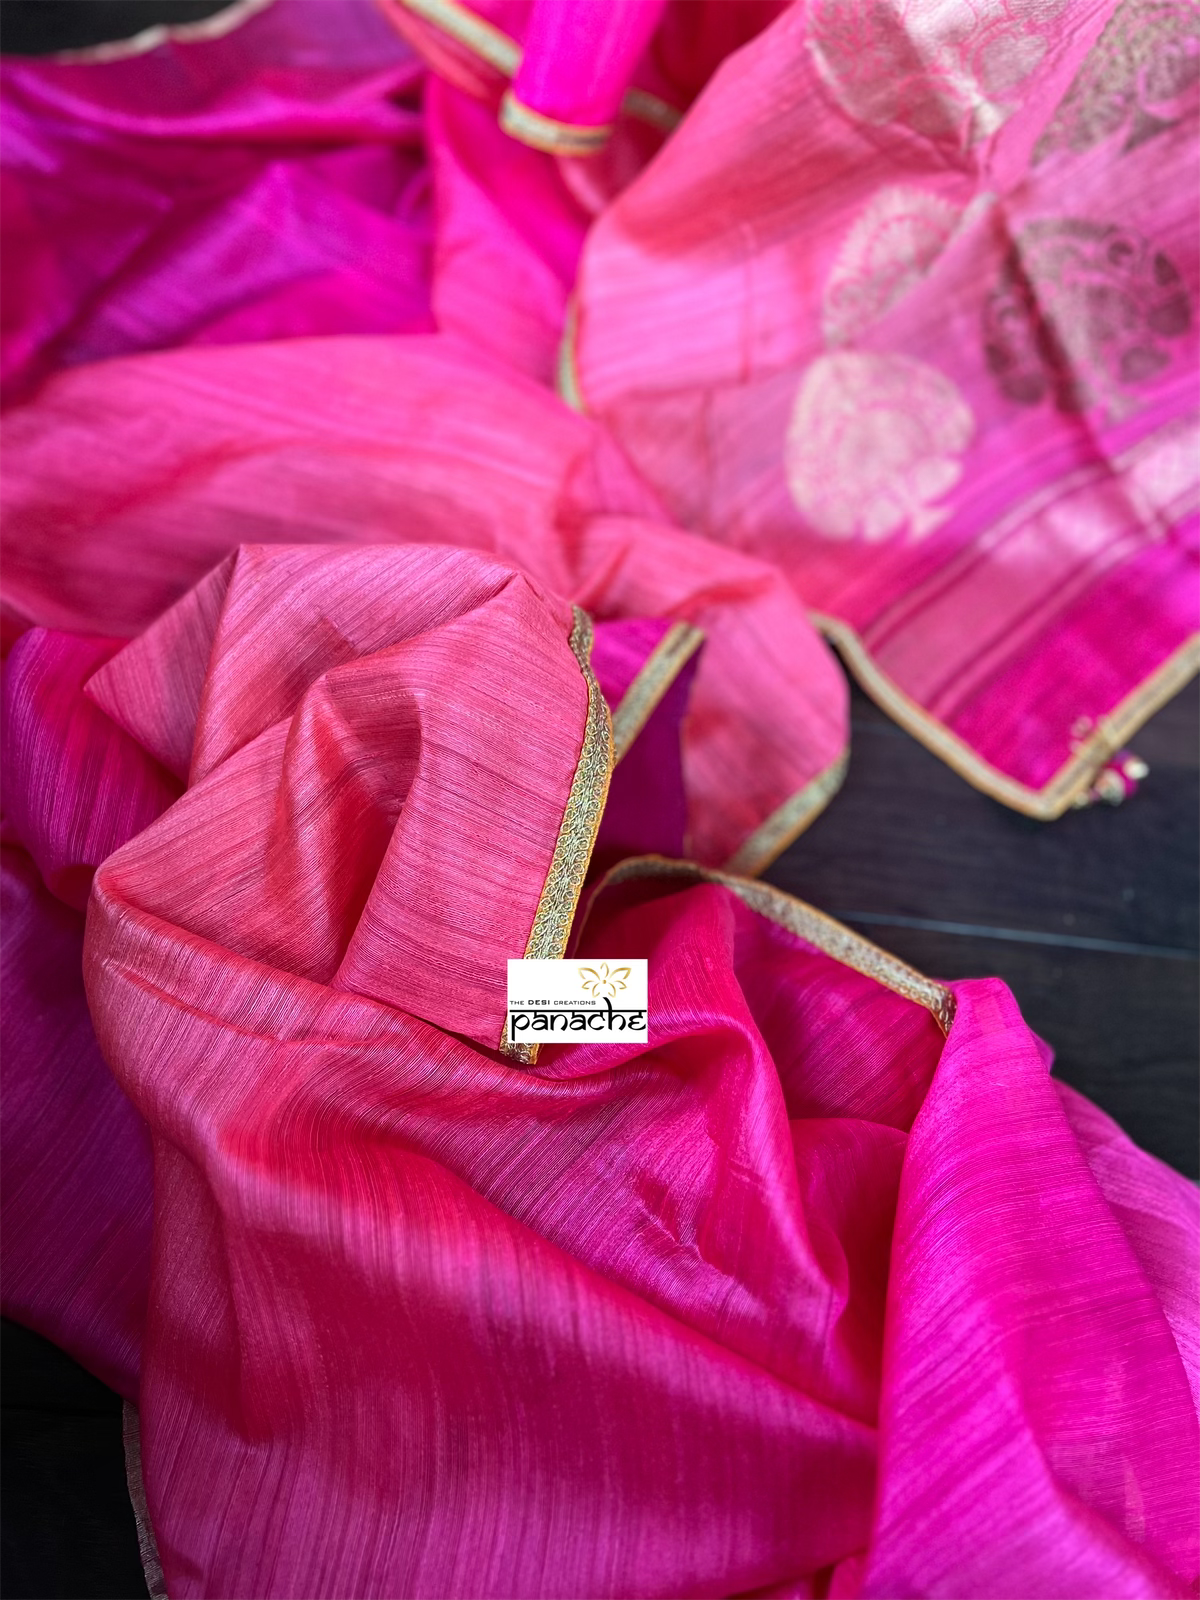 Designer Matka Silk Banarasi - Hot Pink Shaded